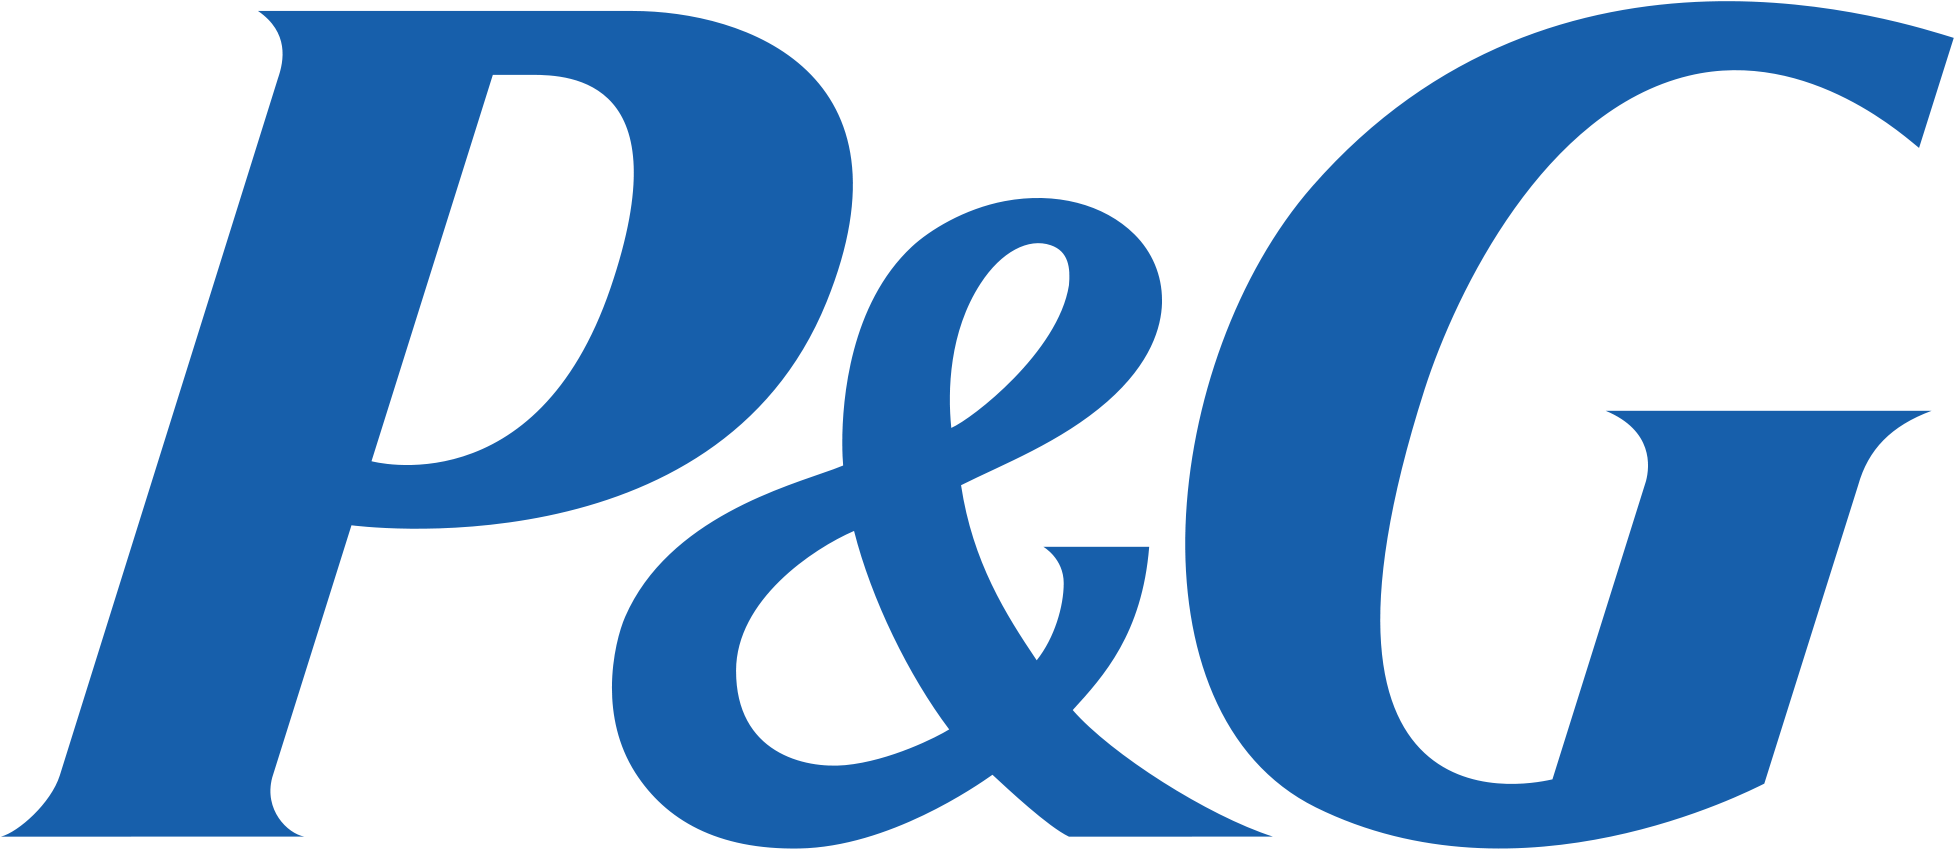 P&g Logo - Procter & Gamble (2272x1704)